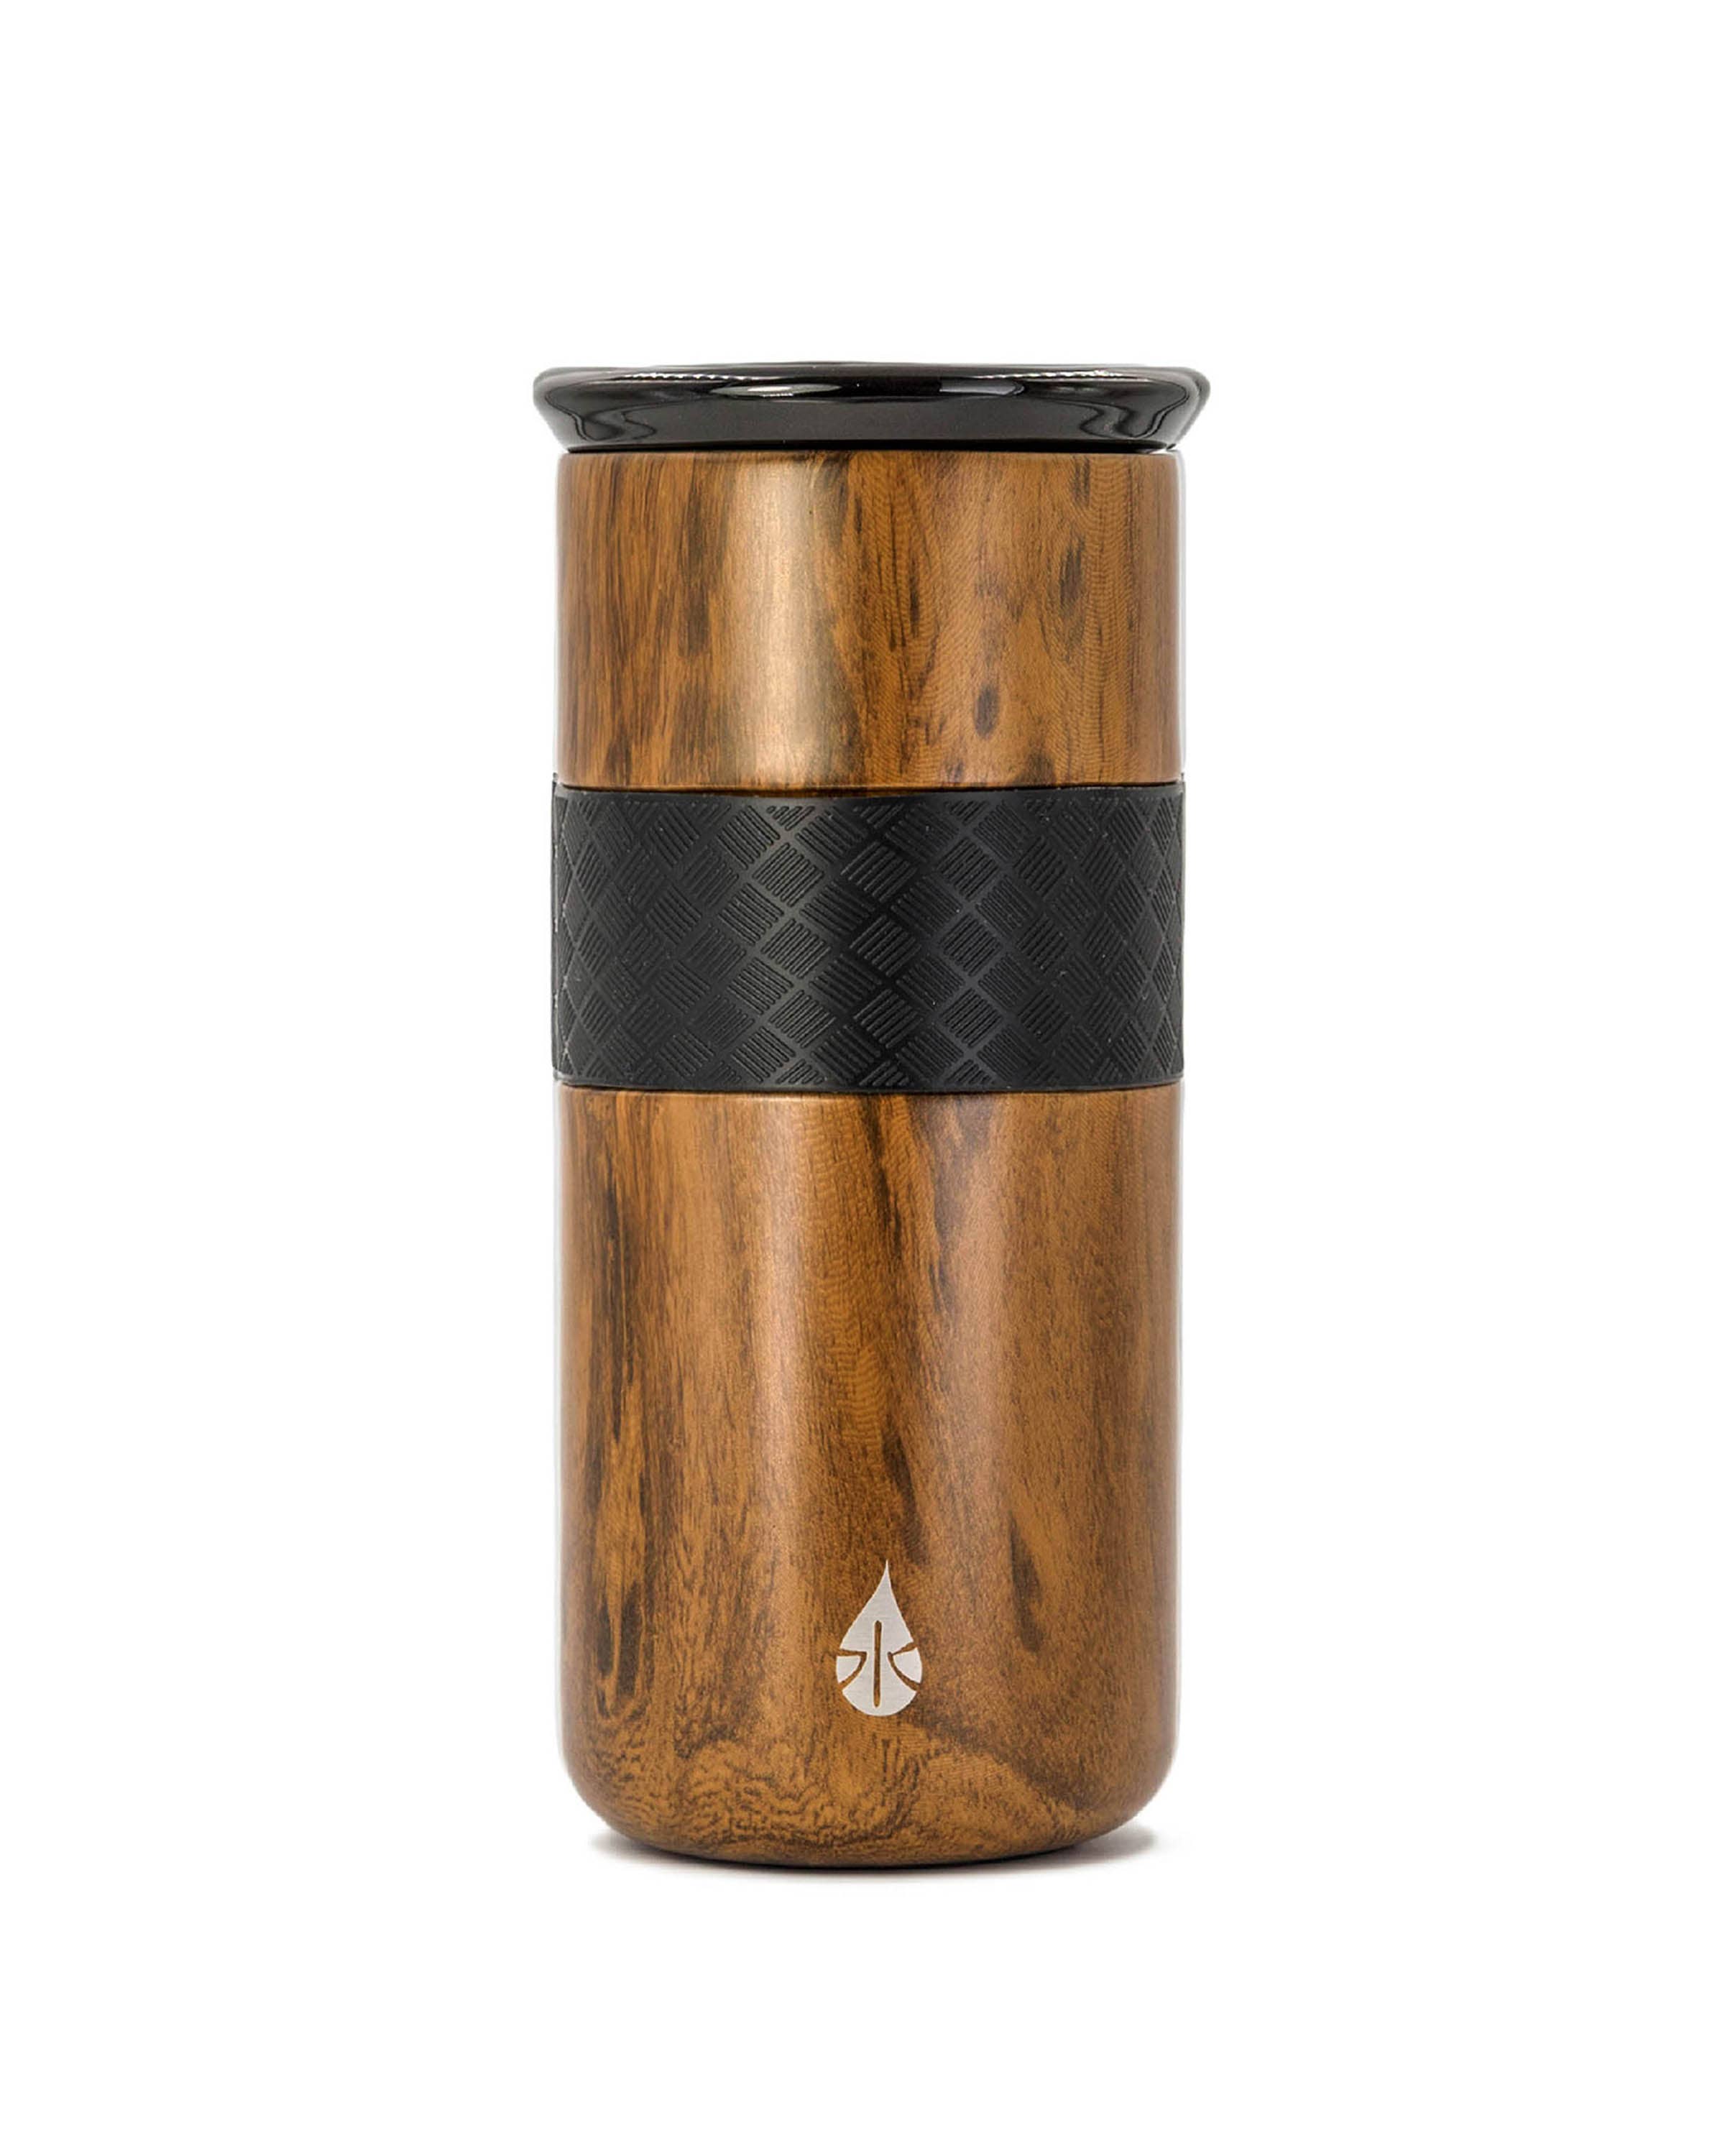 Elemental | Teak Wood Travel Mug Tumbler with Ceramic Lid Stainless Steel Insulated - 16 Oz, Mugs, Elemental, Defiance Outdoor Gear Co.